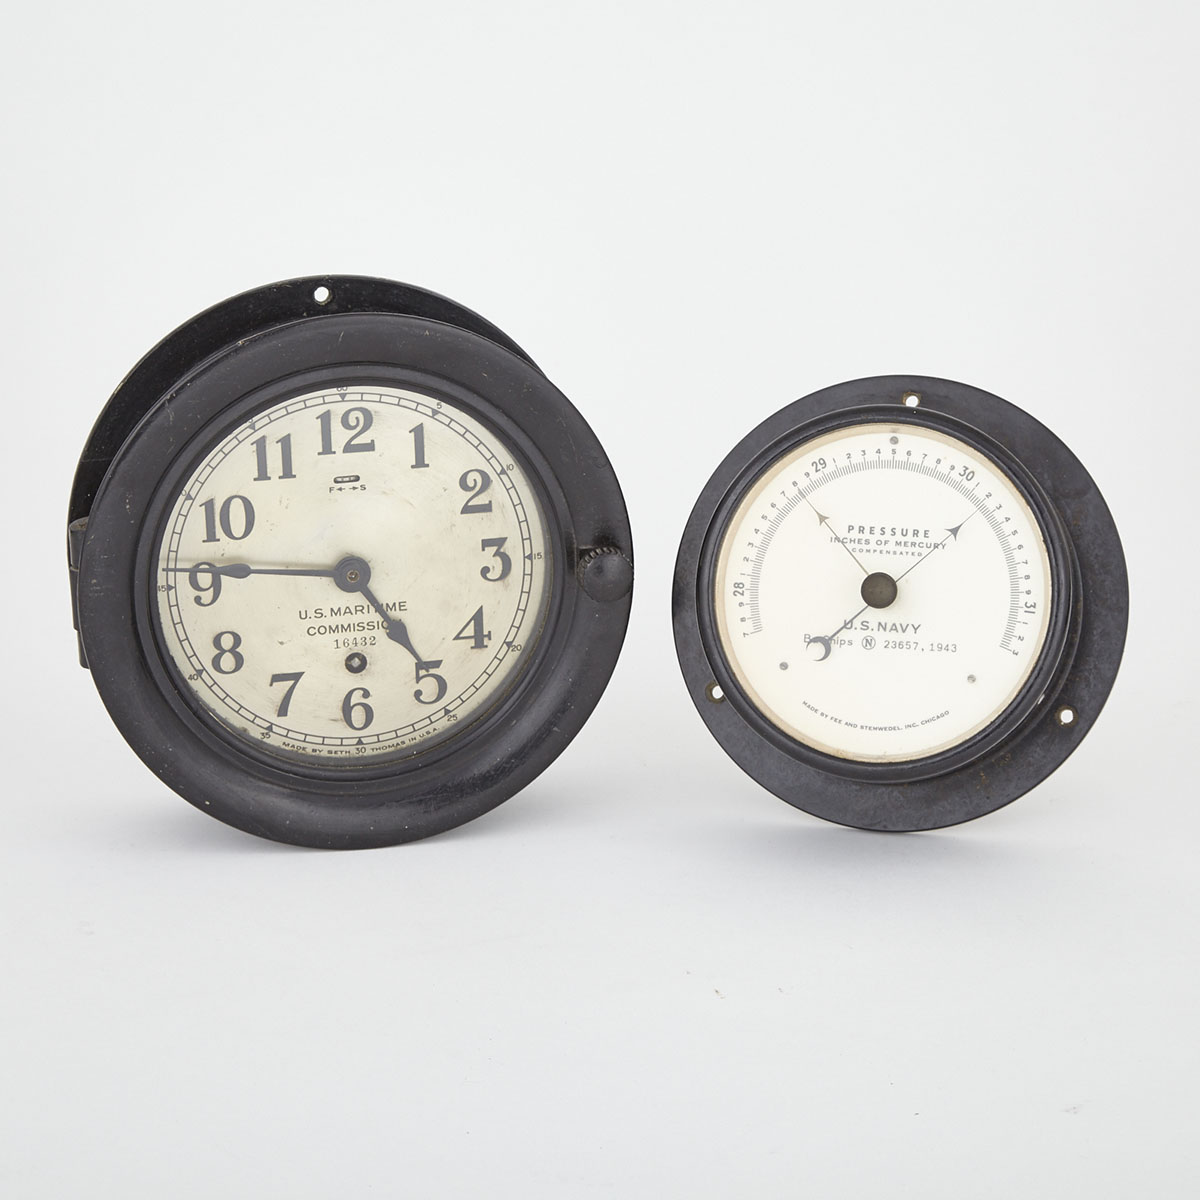 WW II U. S. Maritime Commission Seth Thomas Ship’s Chronometer and a U. S. Navy Marine Barometer, 1943